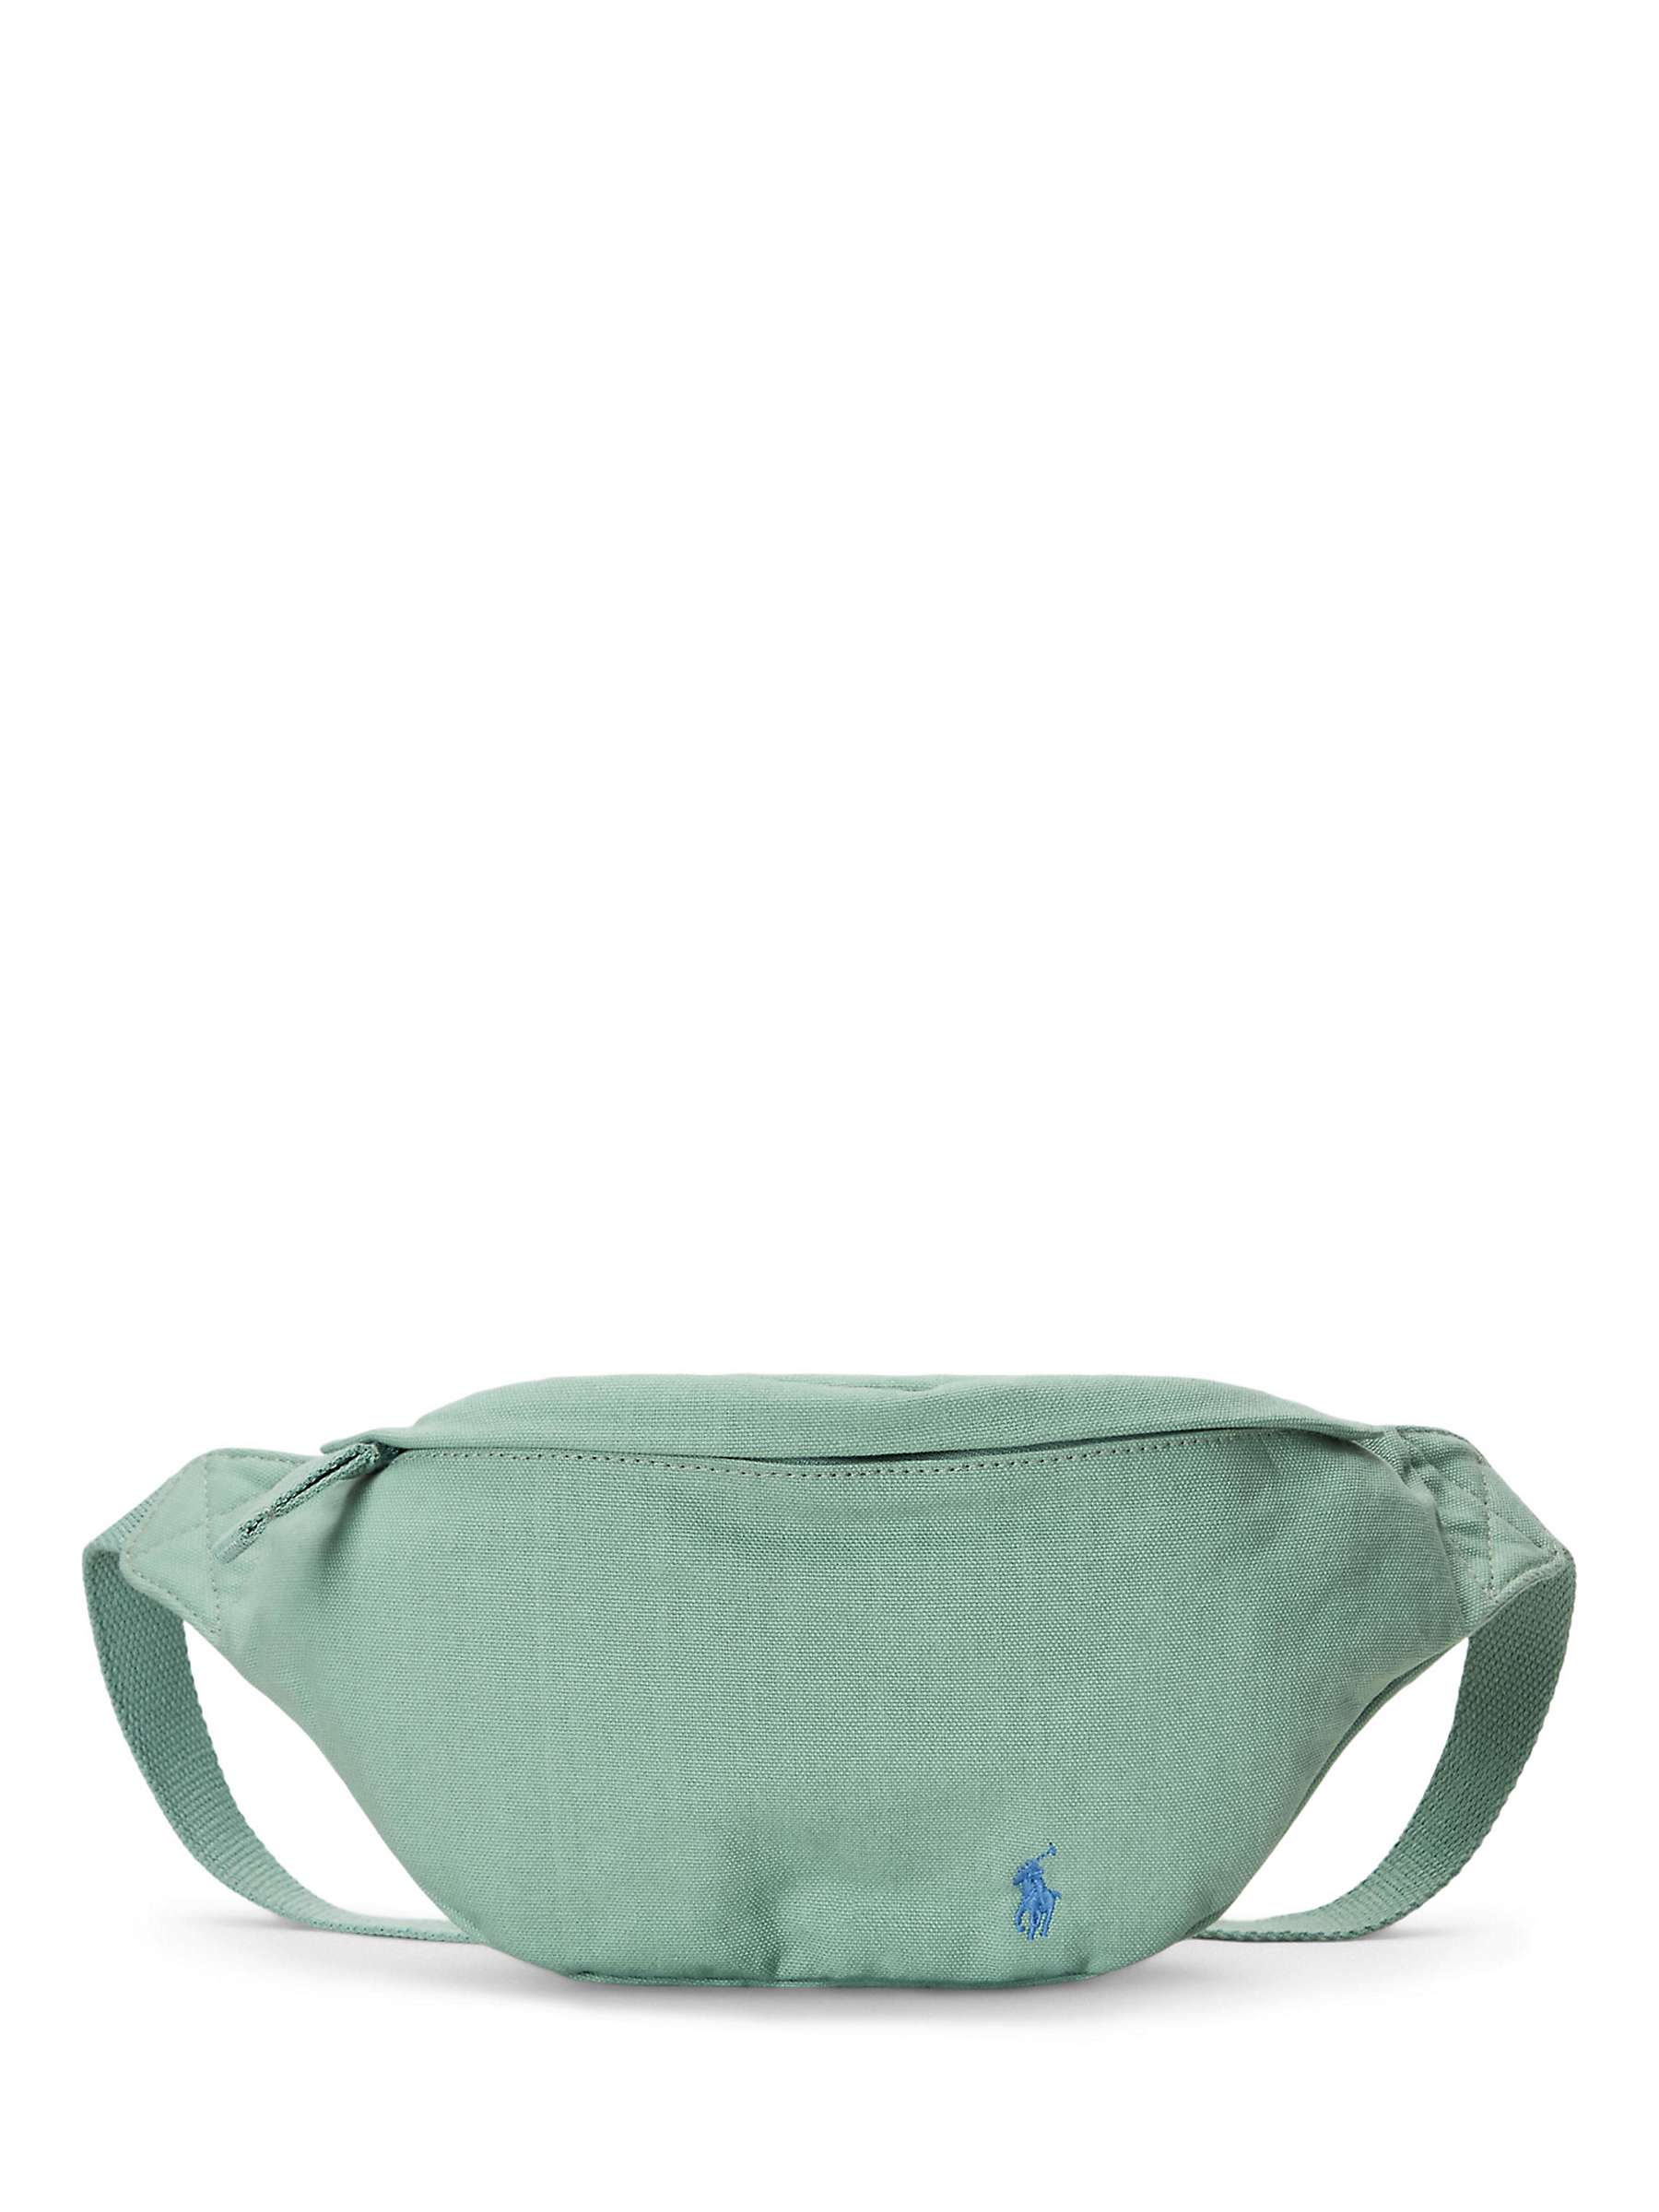 Buy Ralph Lauren Waist Pack Bag, Faded Mint Online at johnlewis.com